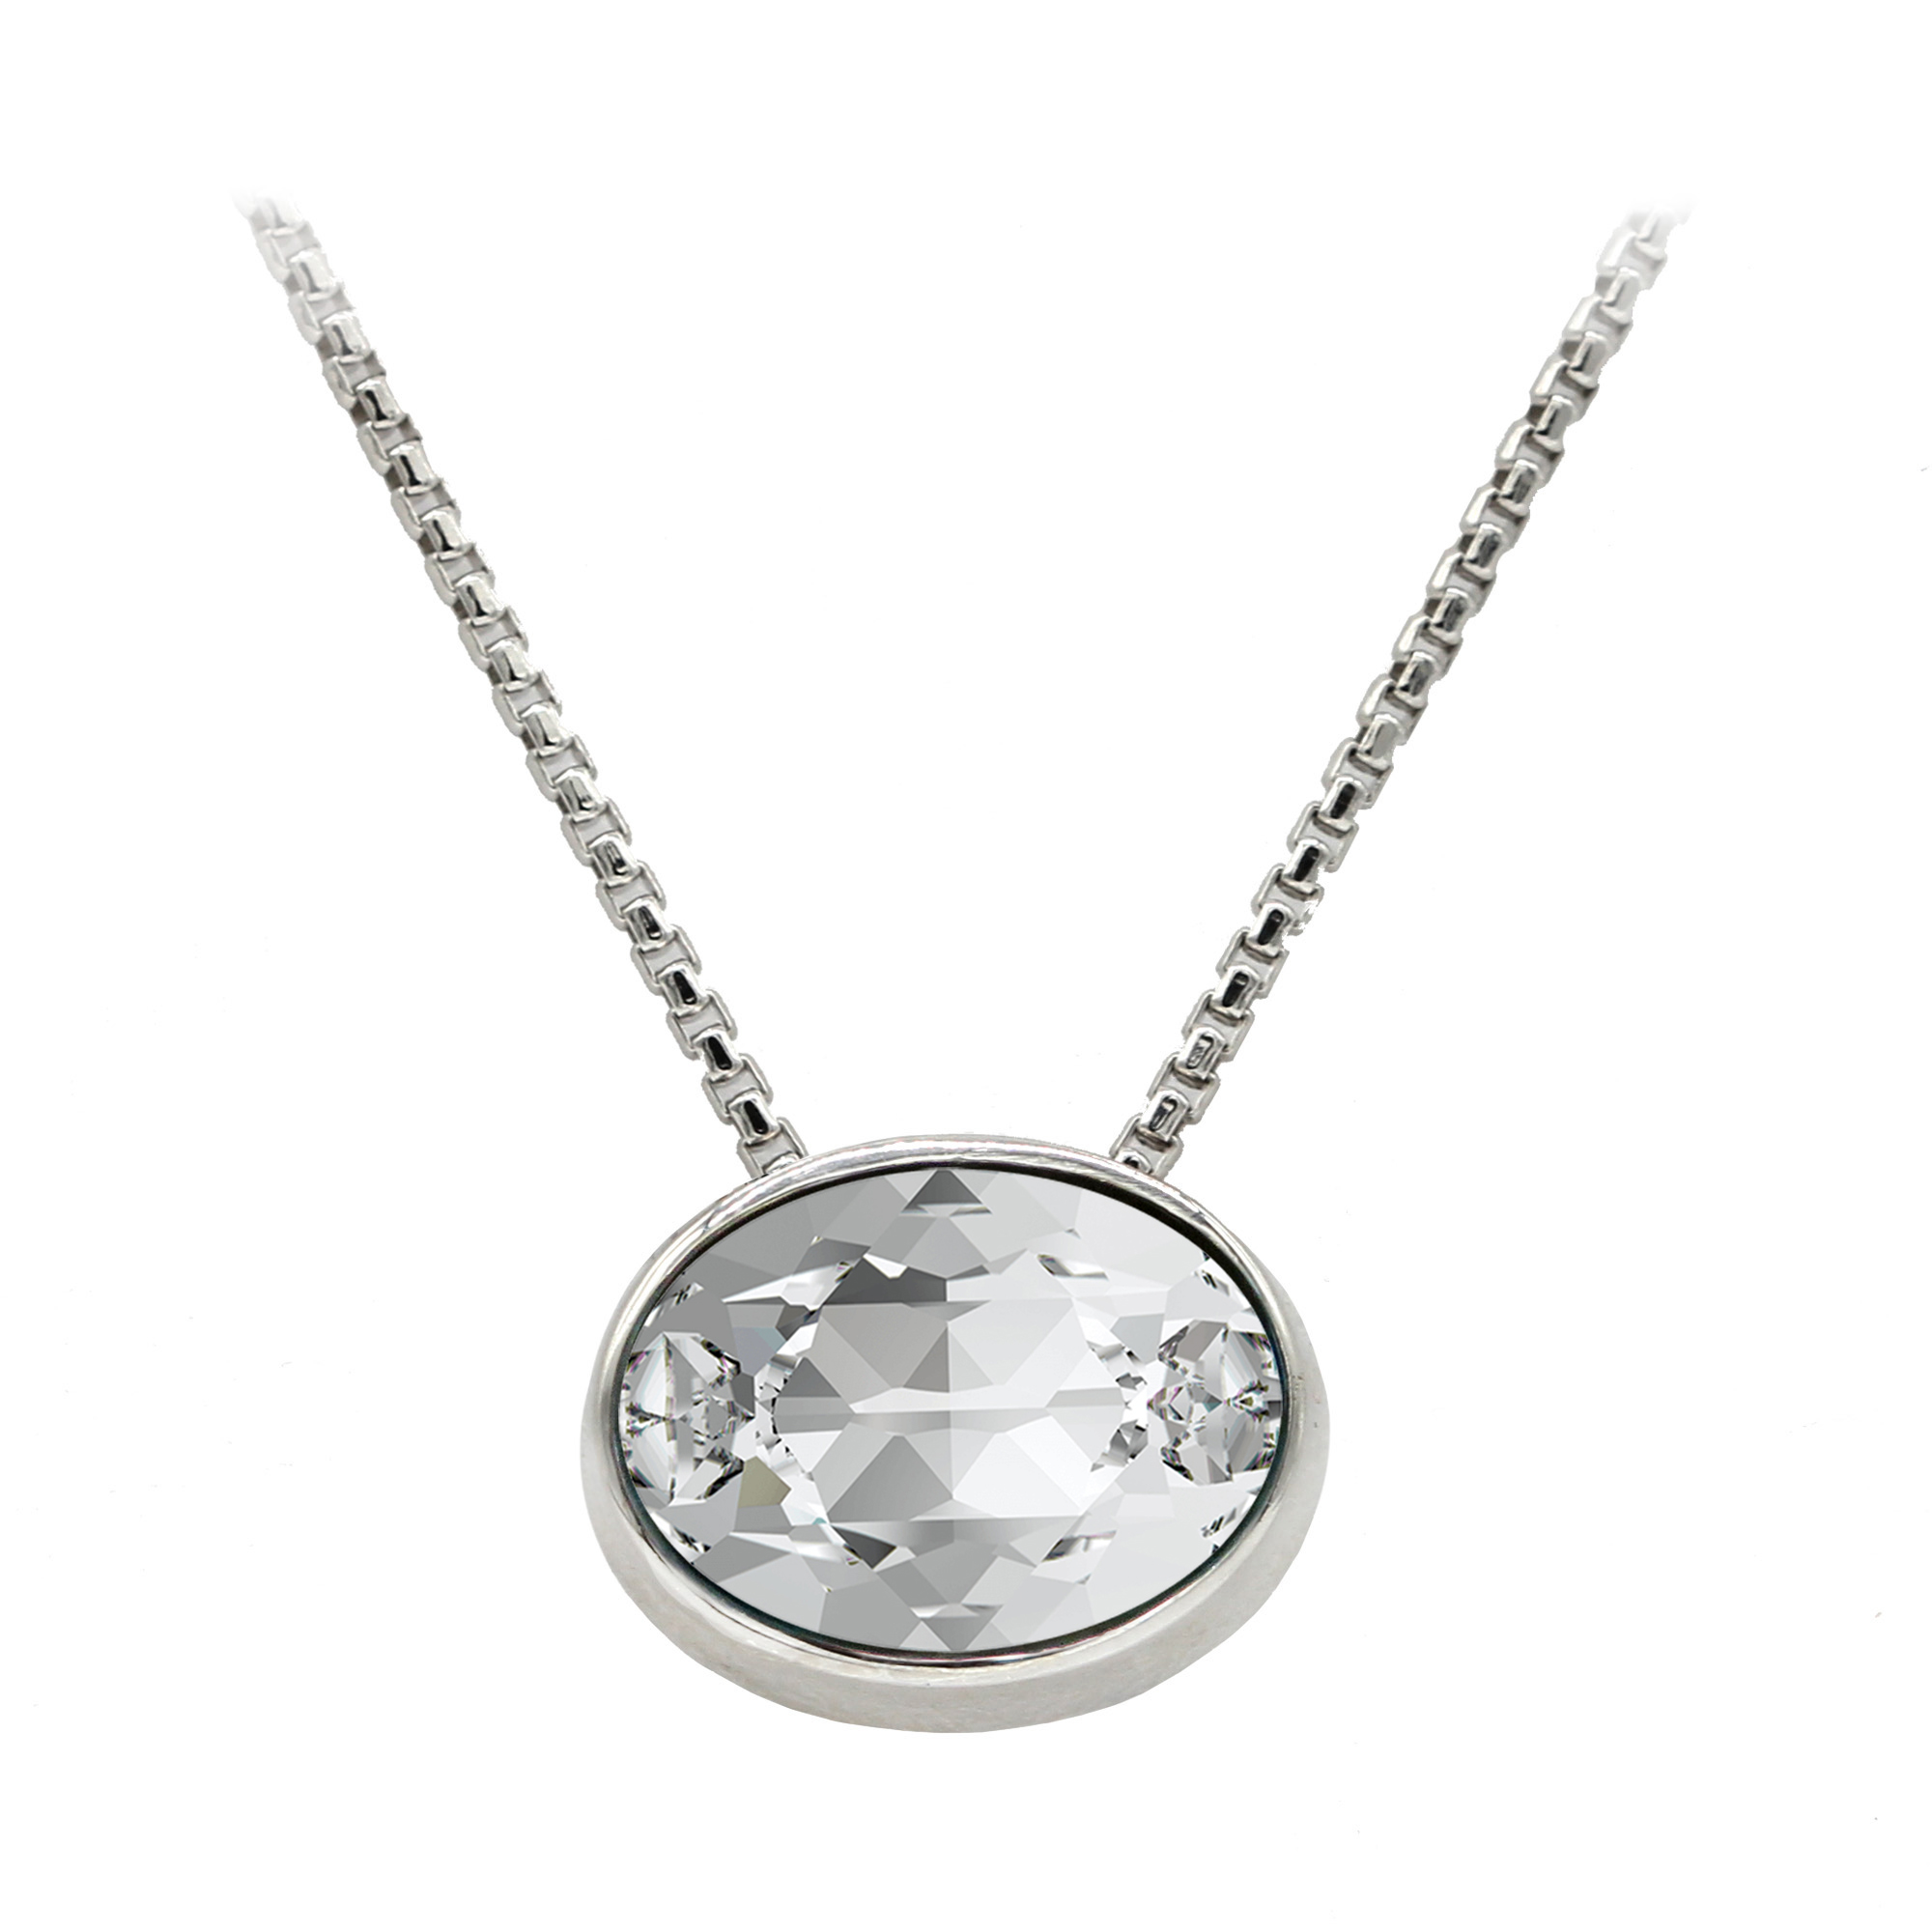 Sterling Silver White Oval Swarovski Crystal Necklace, 16-18" Adj